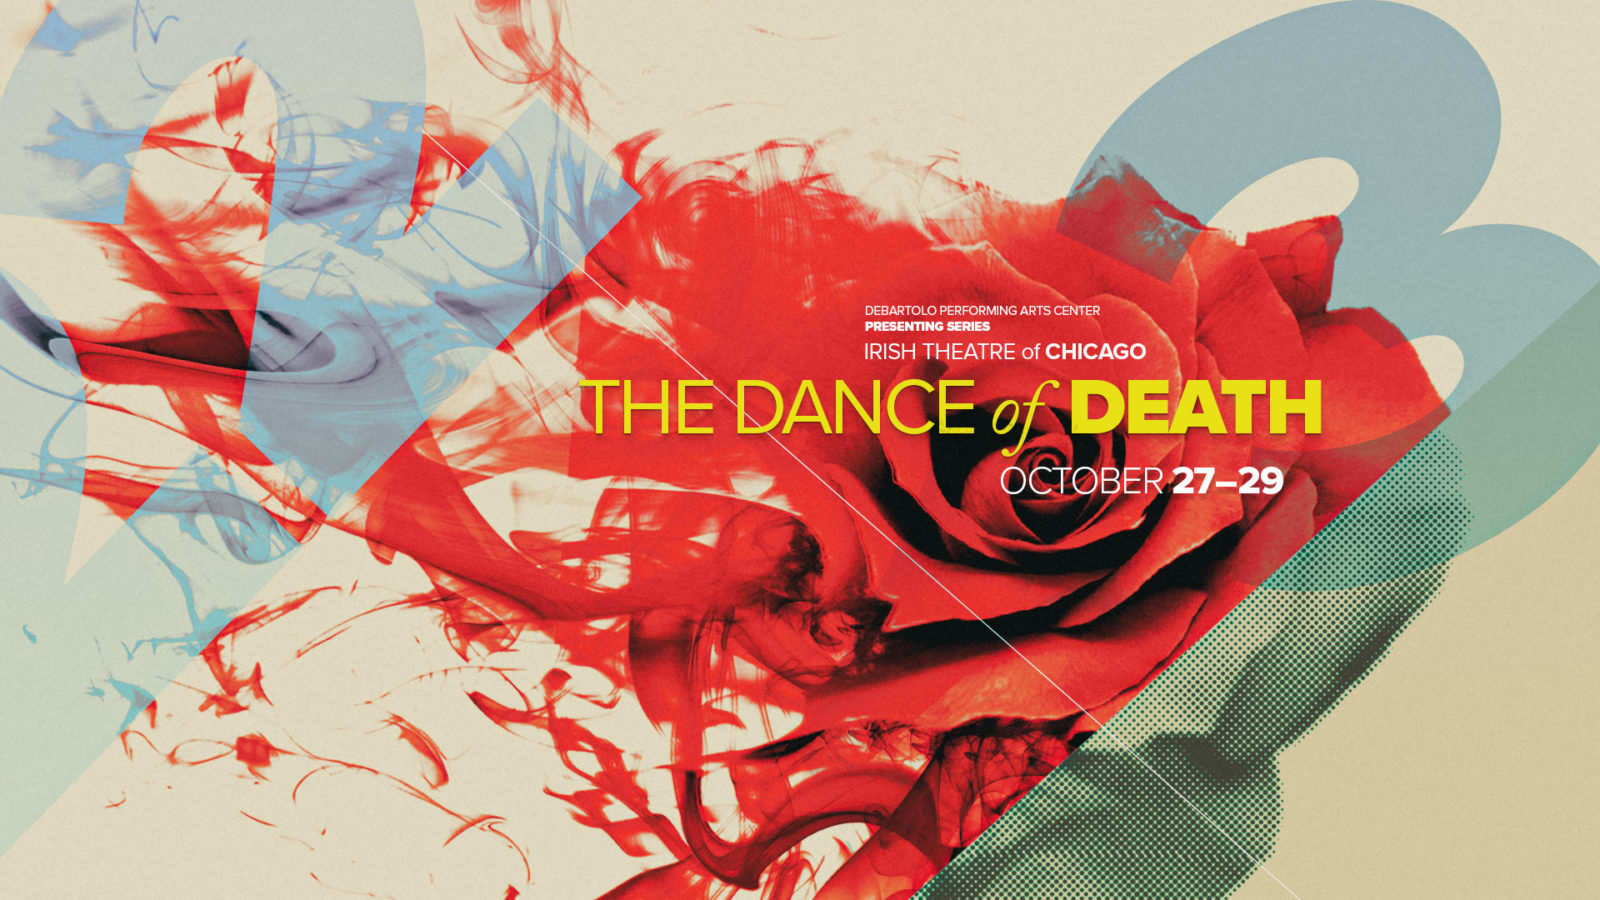 Irish Theatre of Chicago "The Dance of Death"